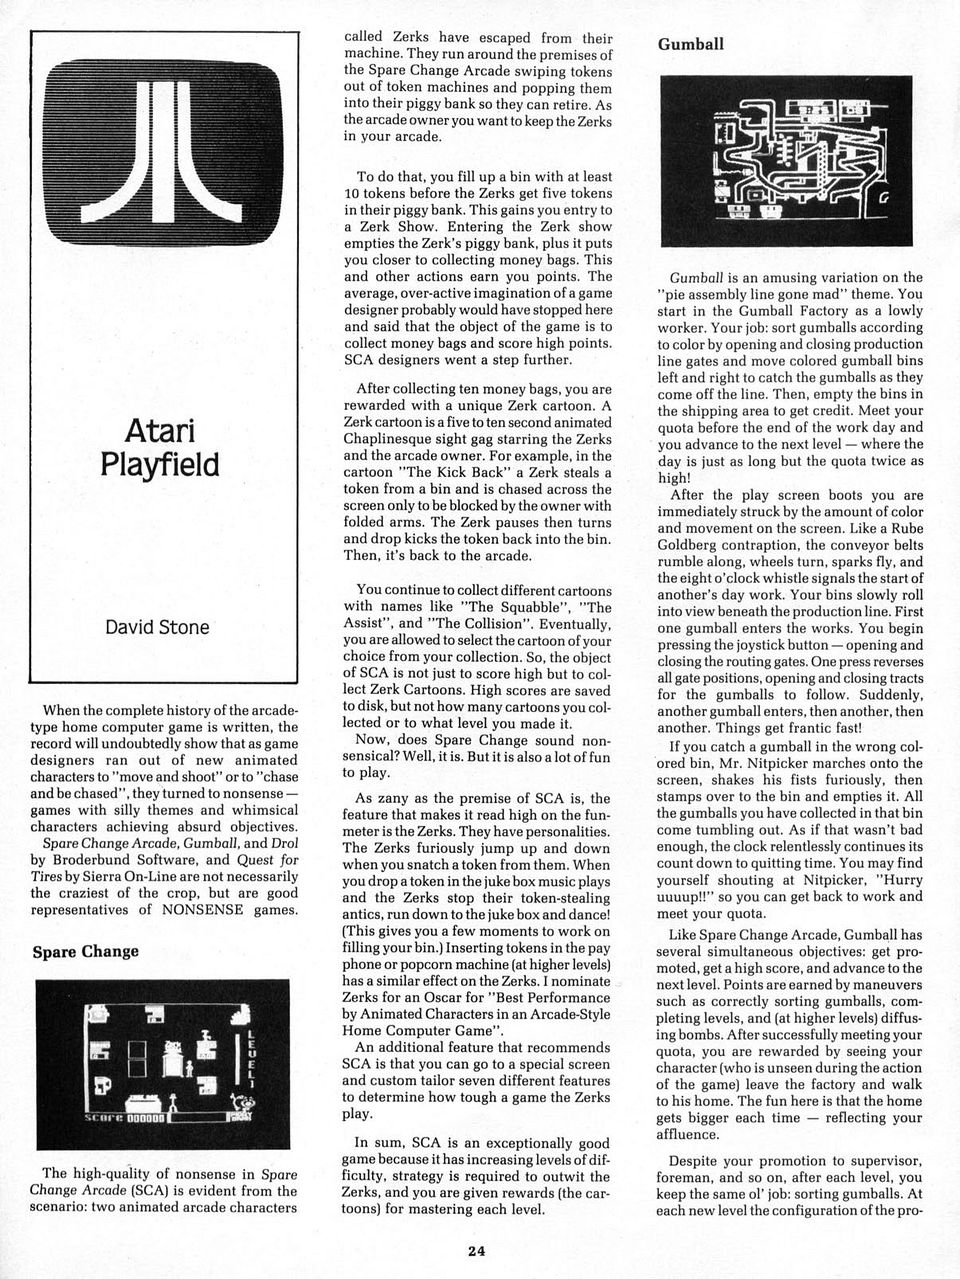 Atari Playfield: Spare Change, Gumball